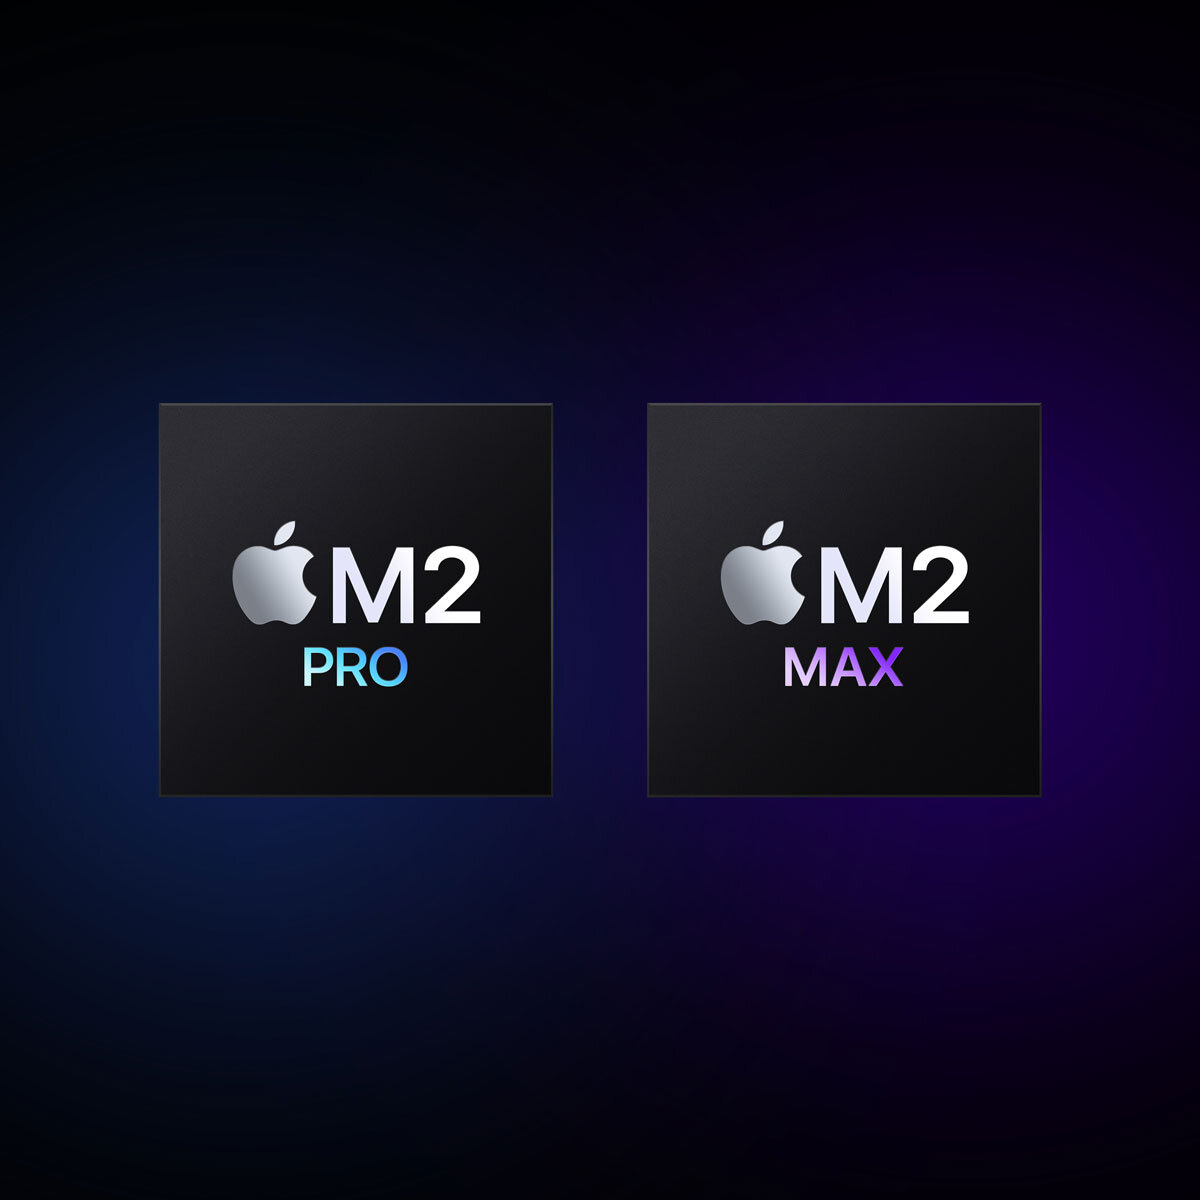 Buy Apple MacBook Pro, Apple M2 Pro Chip 10-Core CPU, 16-Core GPU, 16GB RAM, 512GB SSD, 14 Inch in Space Grey at costco.co.uk